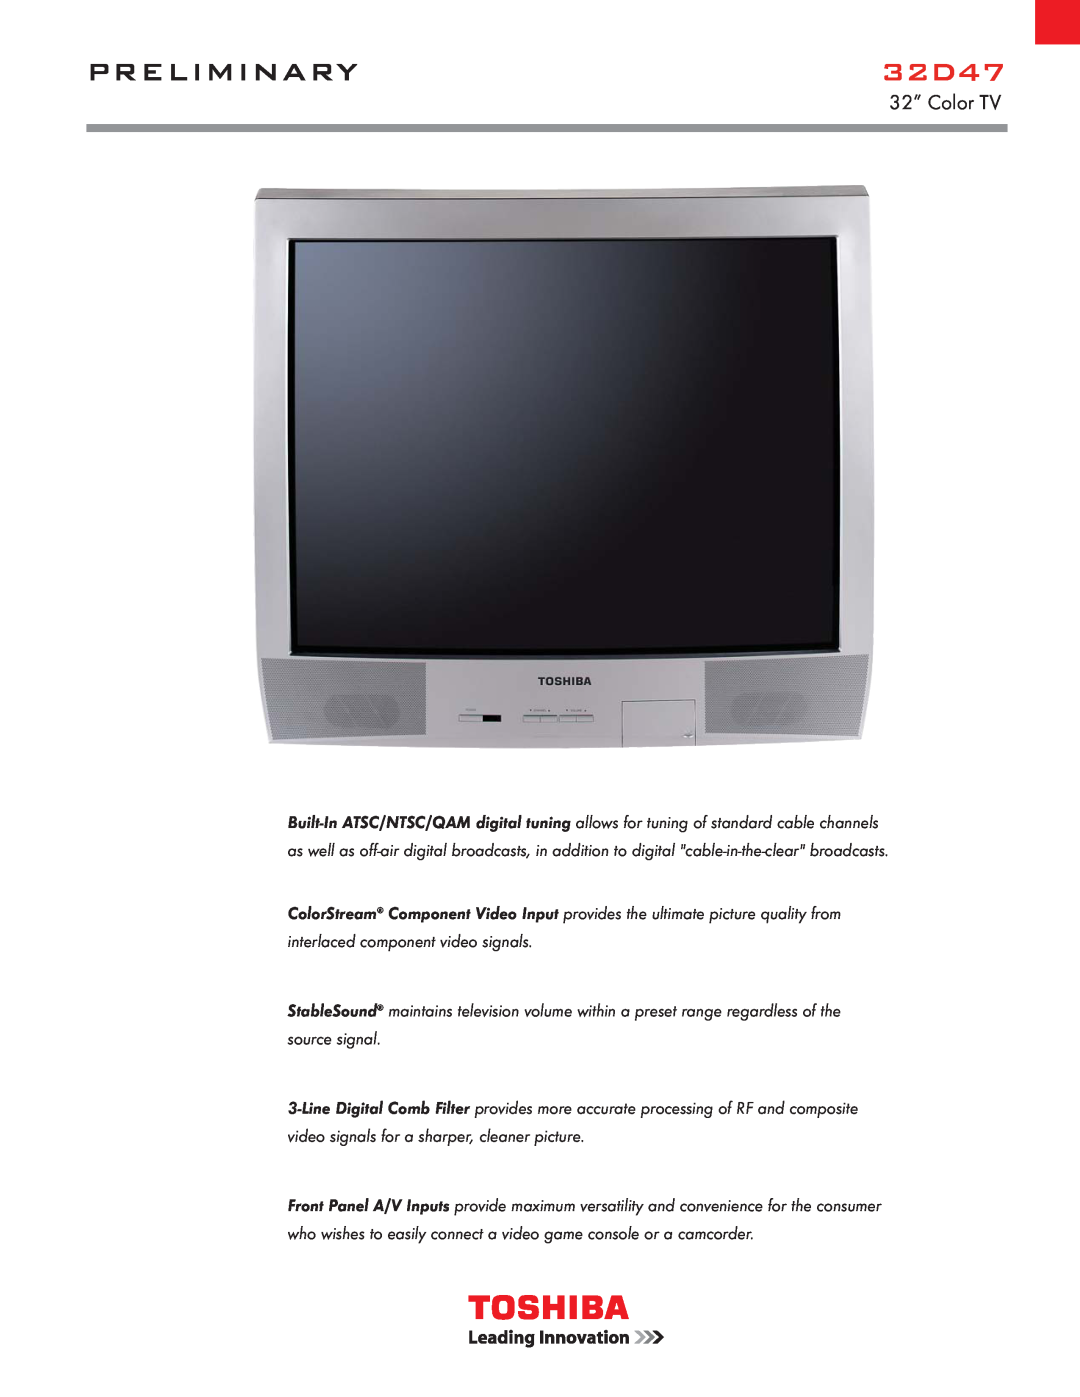 Toshiba 32D47 manual Preliminary, 32” Color TV 